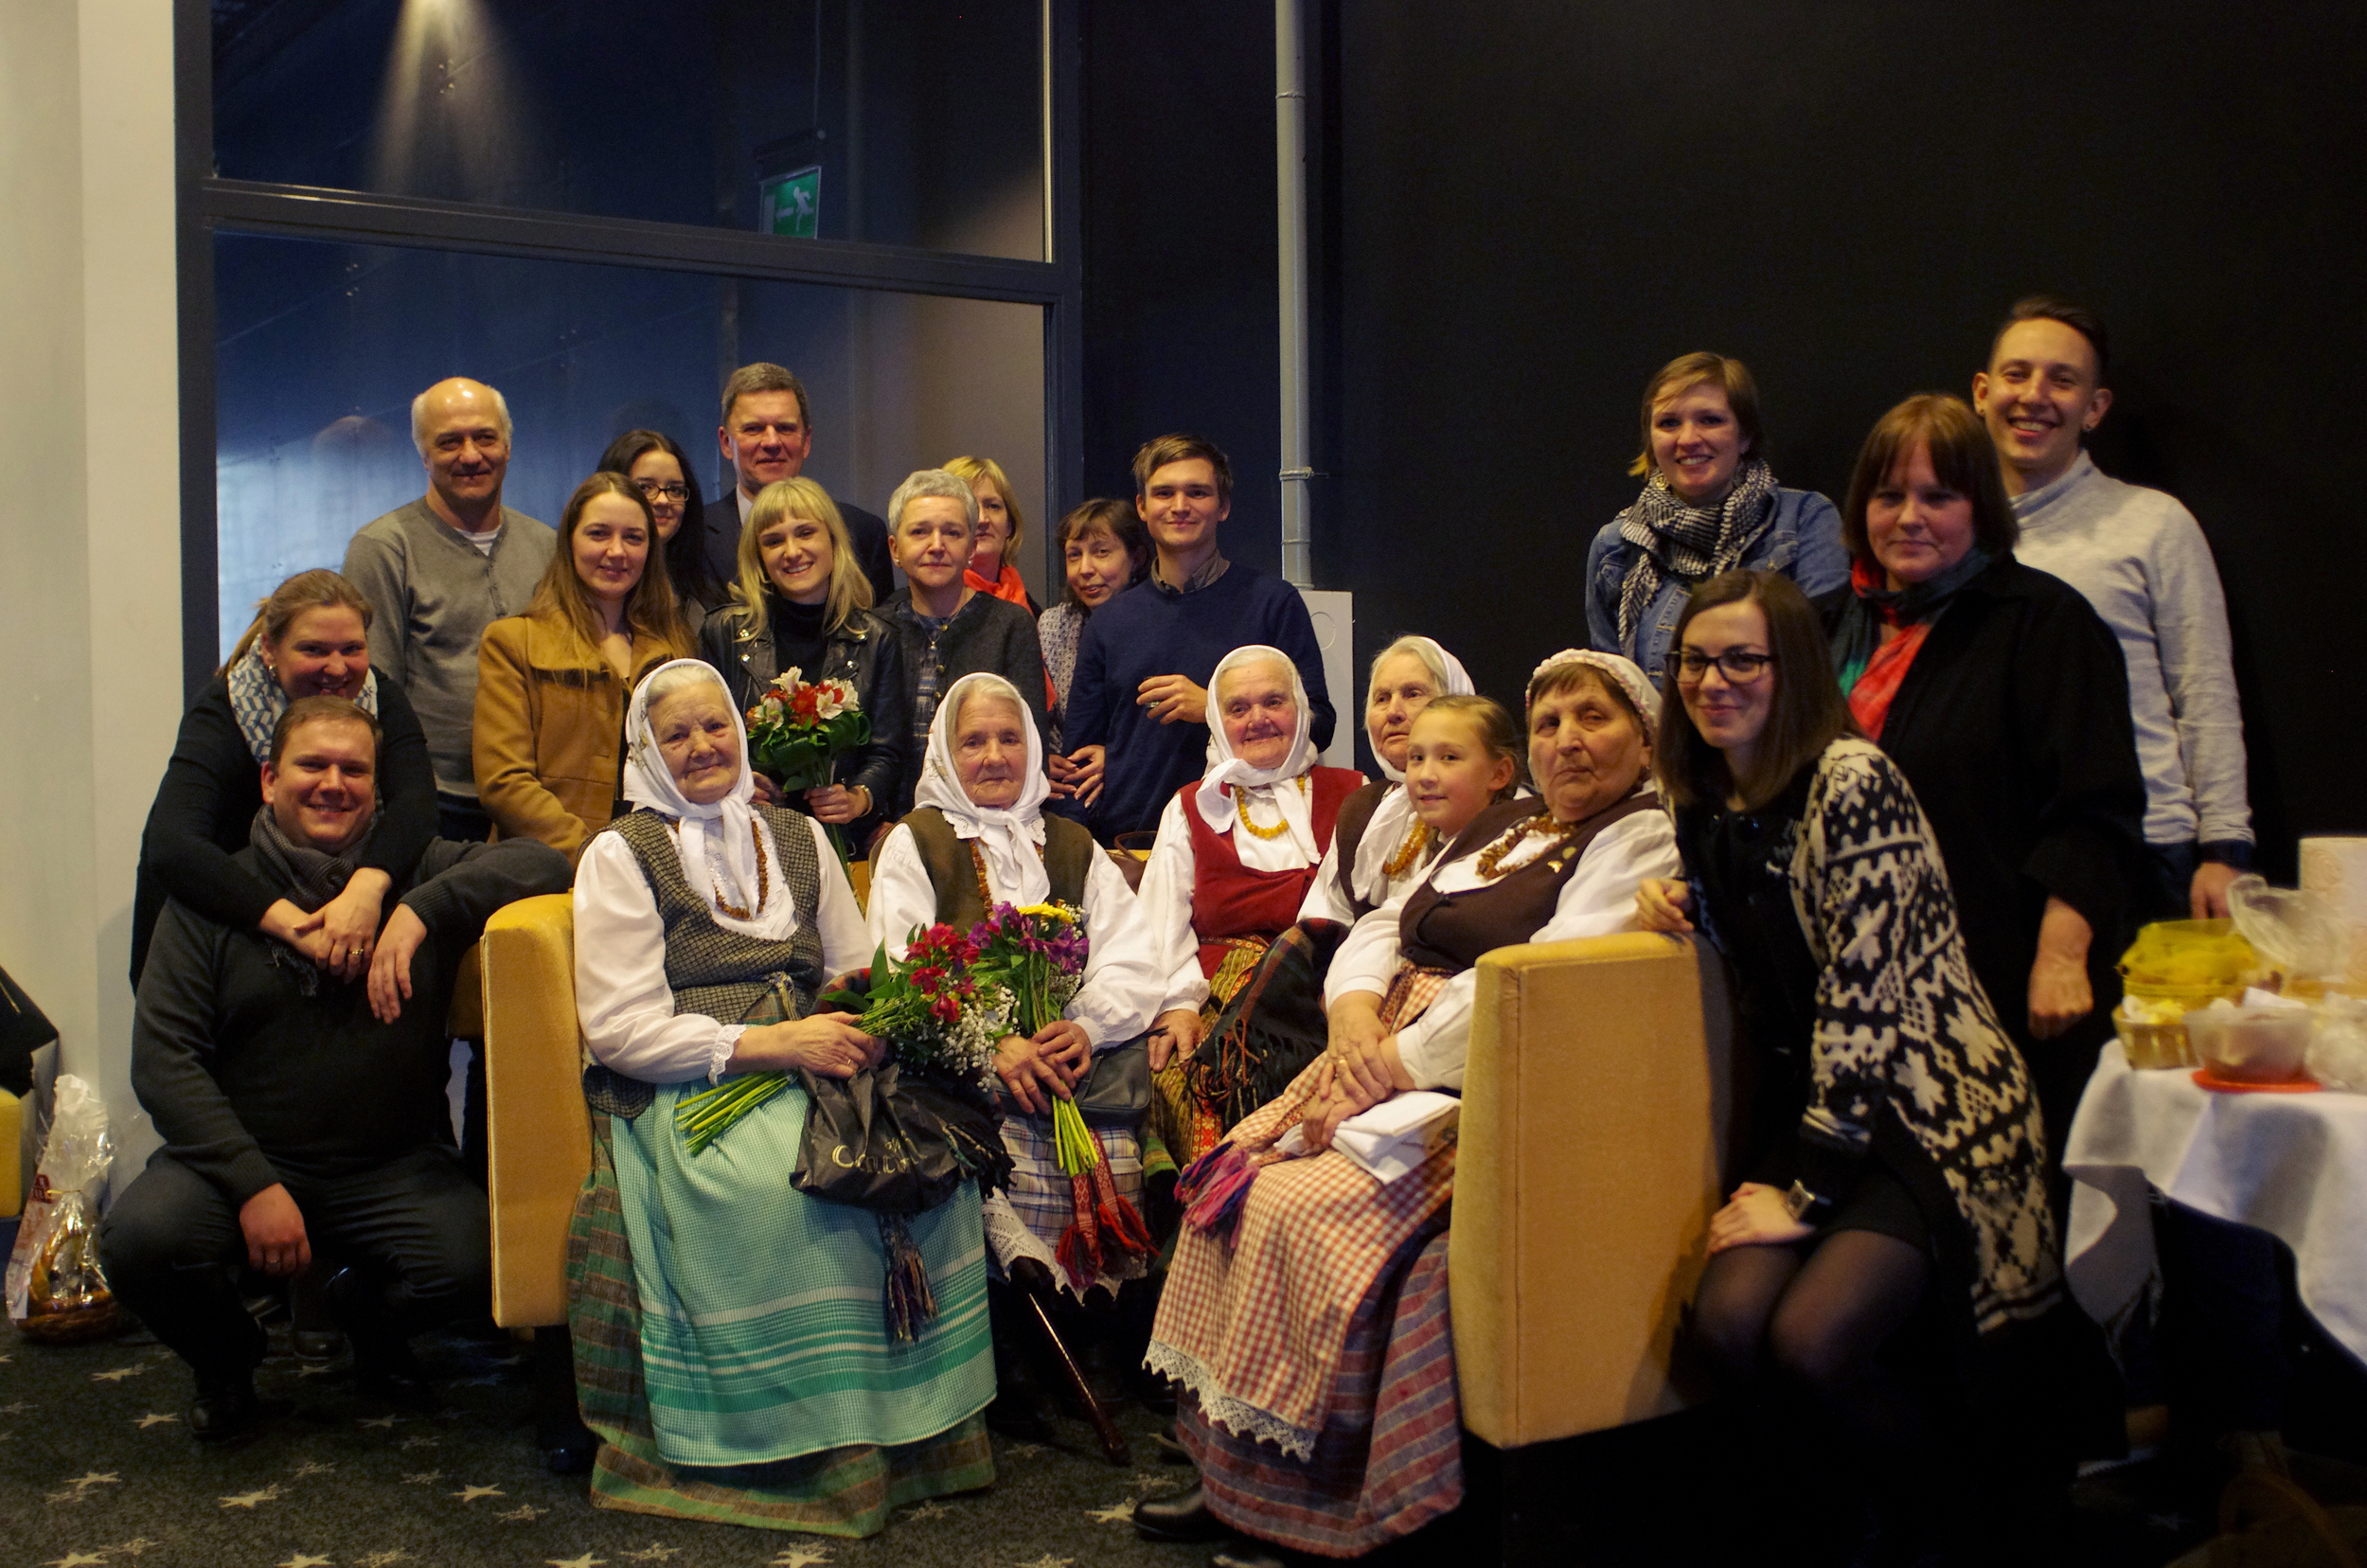  World Premiere at the Vilnius International Film Festival in Vilnius, Lithuania (March 2015). 